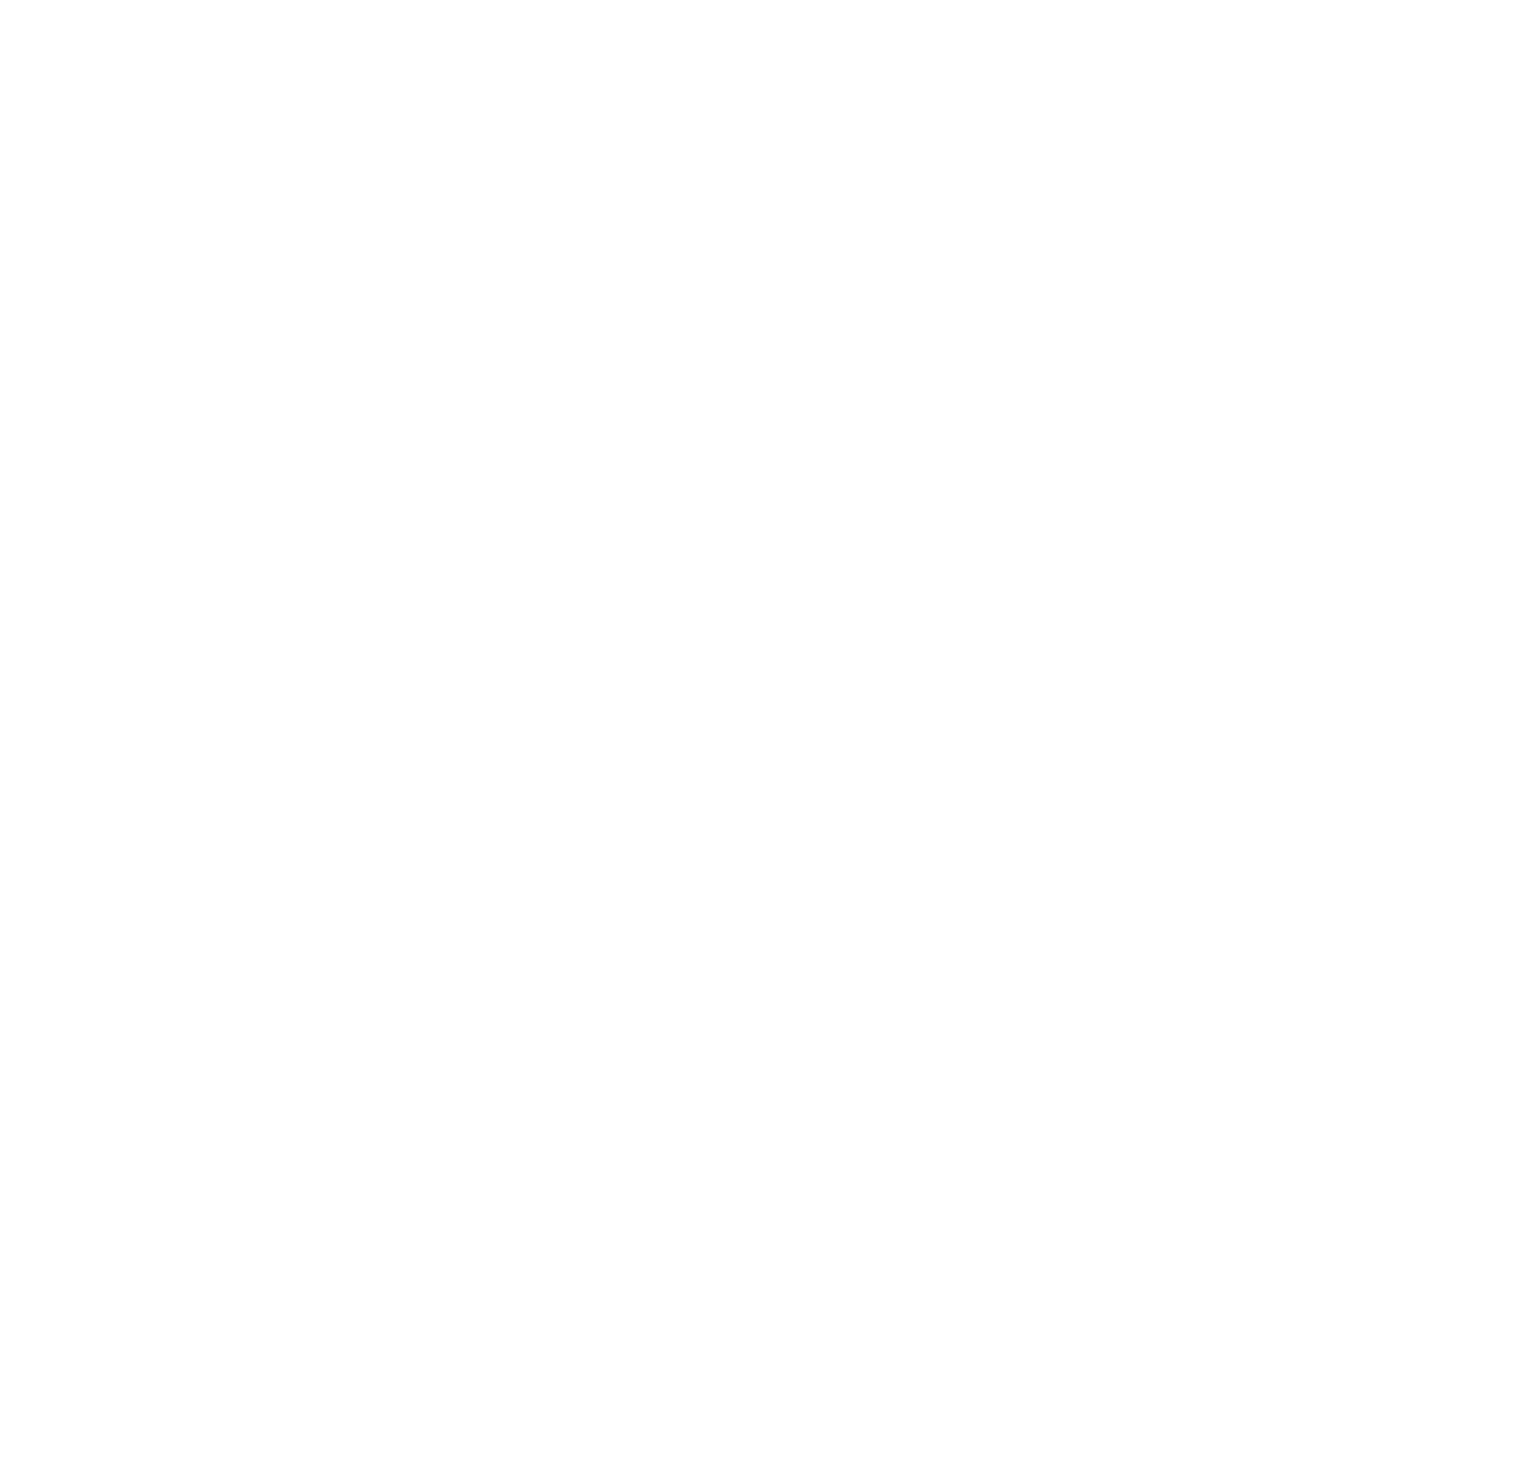 Owl Rock Capital logo for dark backgrounds (transparent PNG)